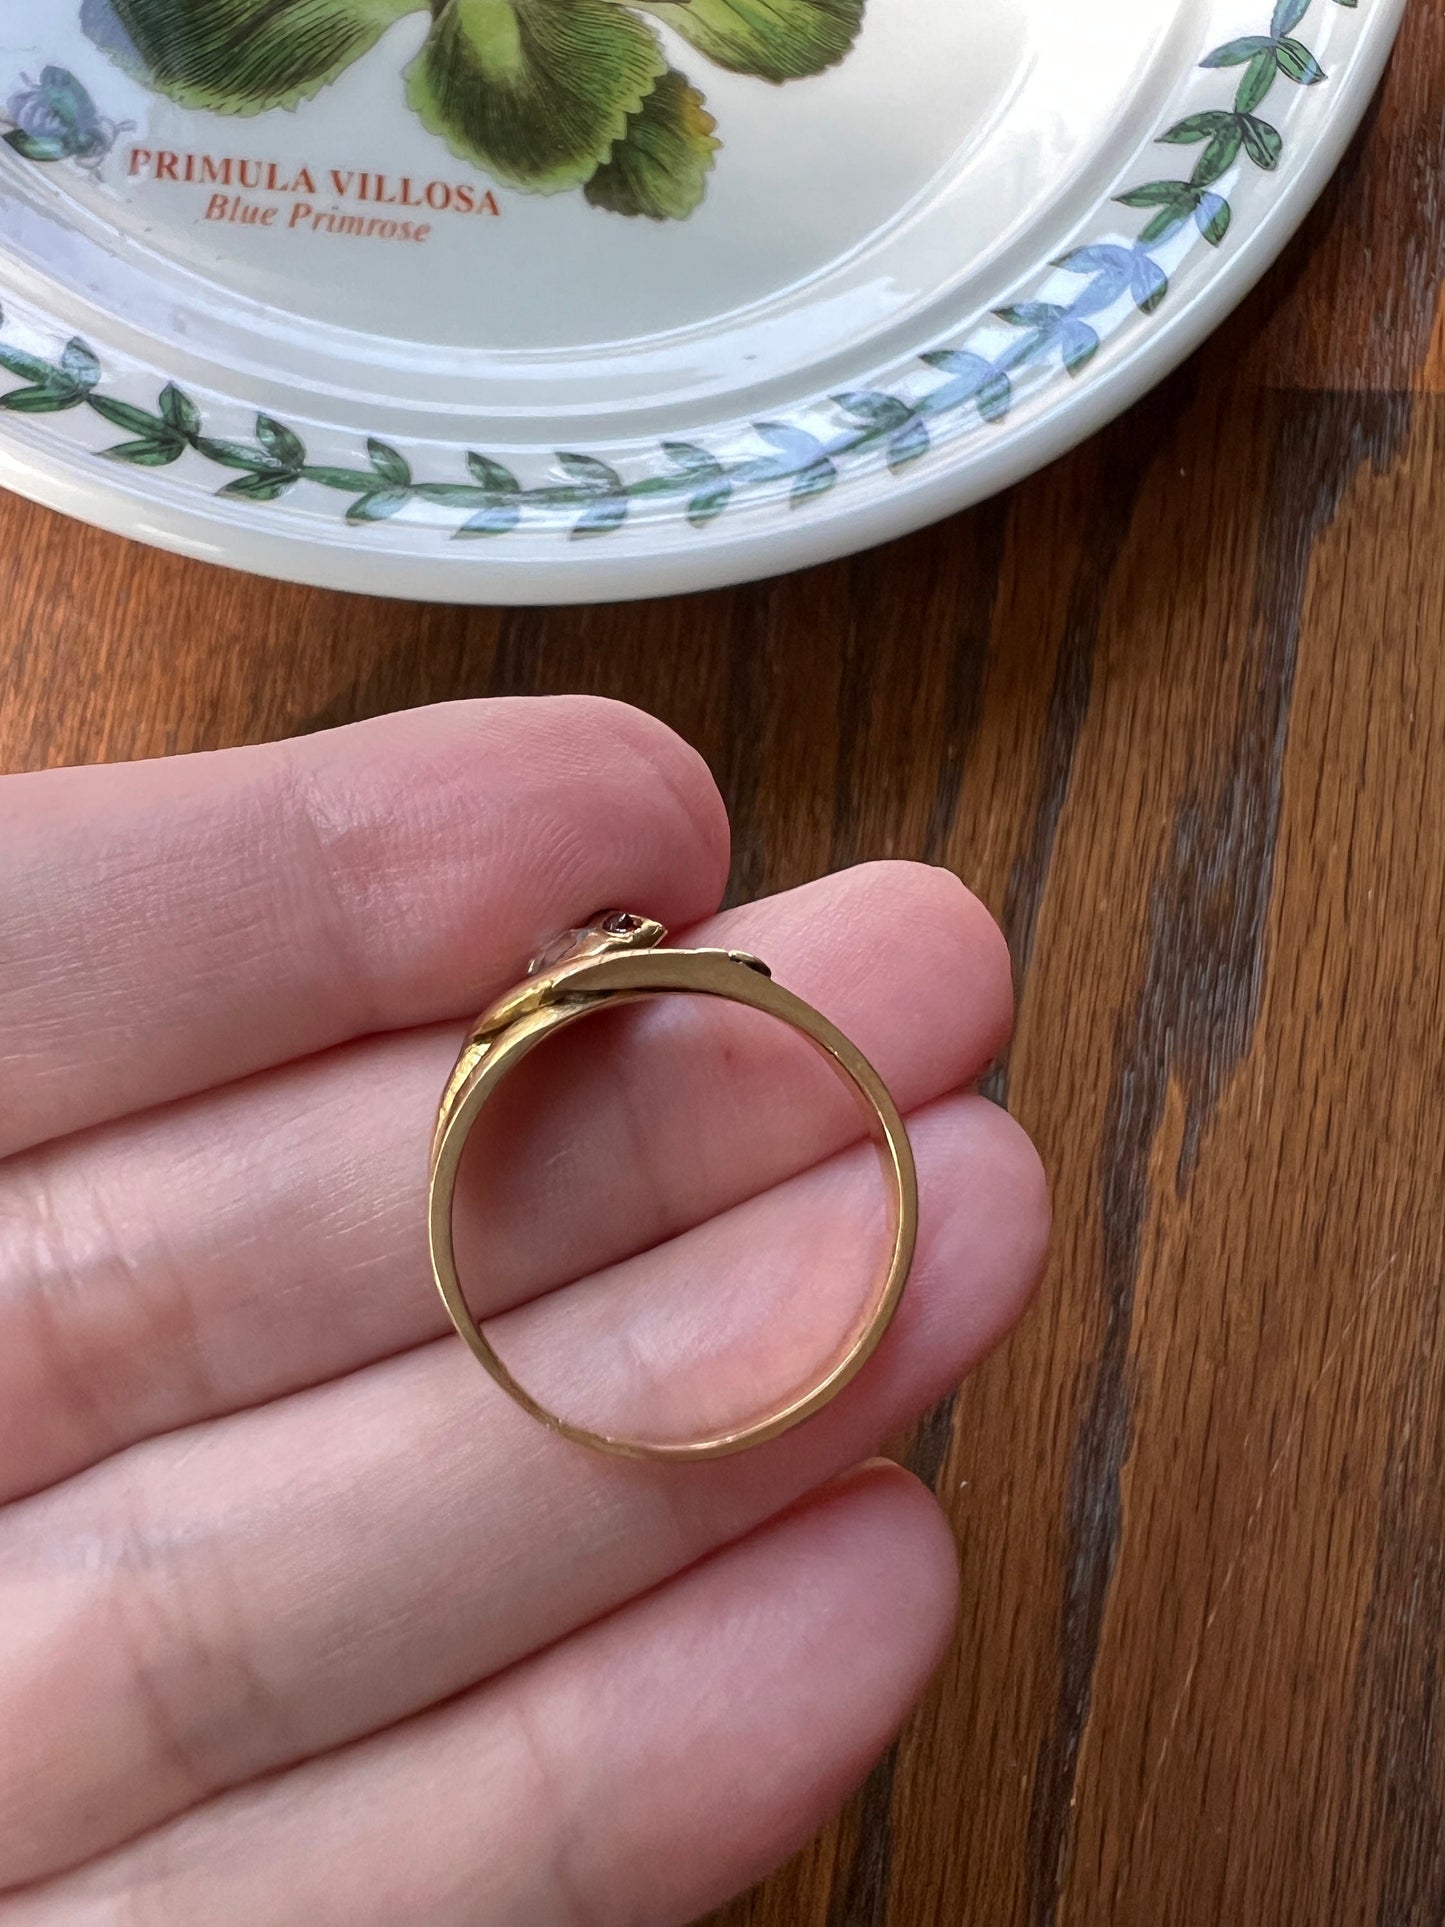 Table Cut DIAMOND Antique Georgian Era SNAKE Ring Victorian 18k Gold Ring Garnet Eye Coiled Stacker Band Romantic Gift Eternal Love Figural